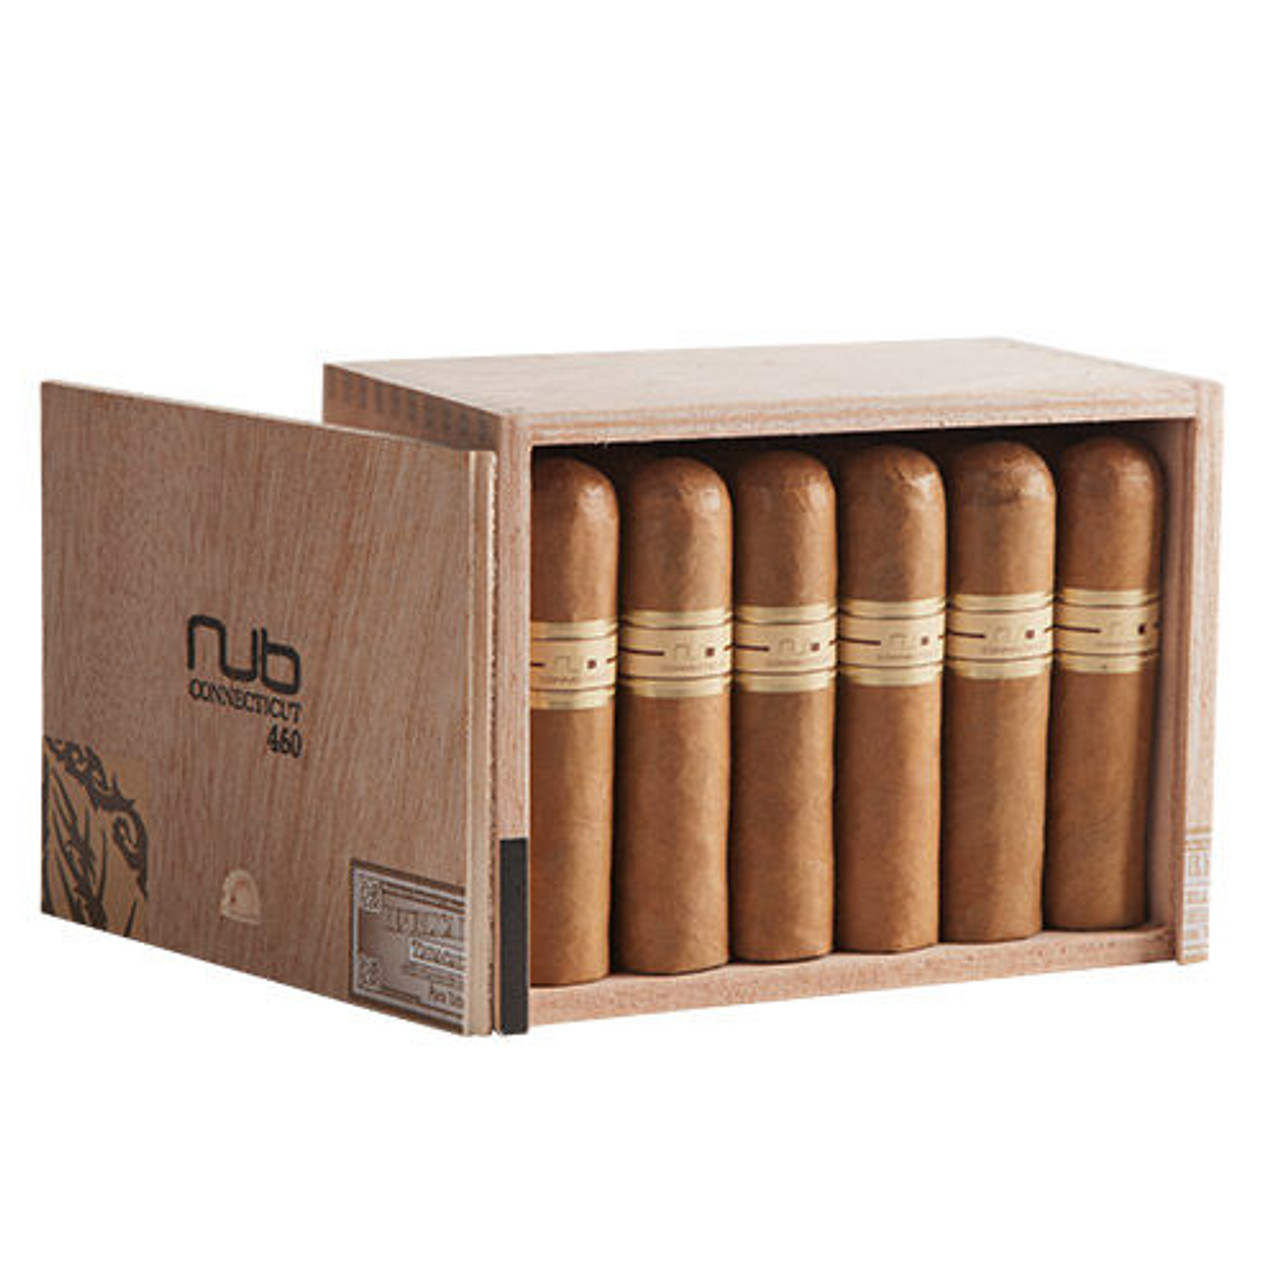 Nub 354 Connecticut Cigars - 3 x 54 (Box of 24)